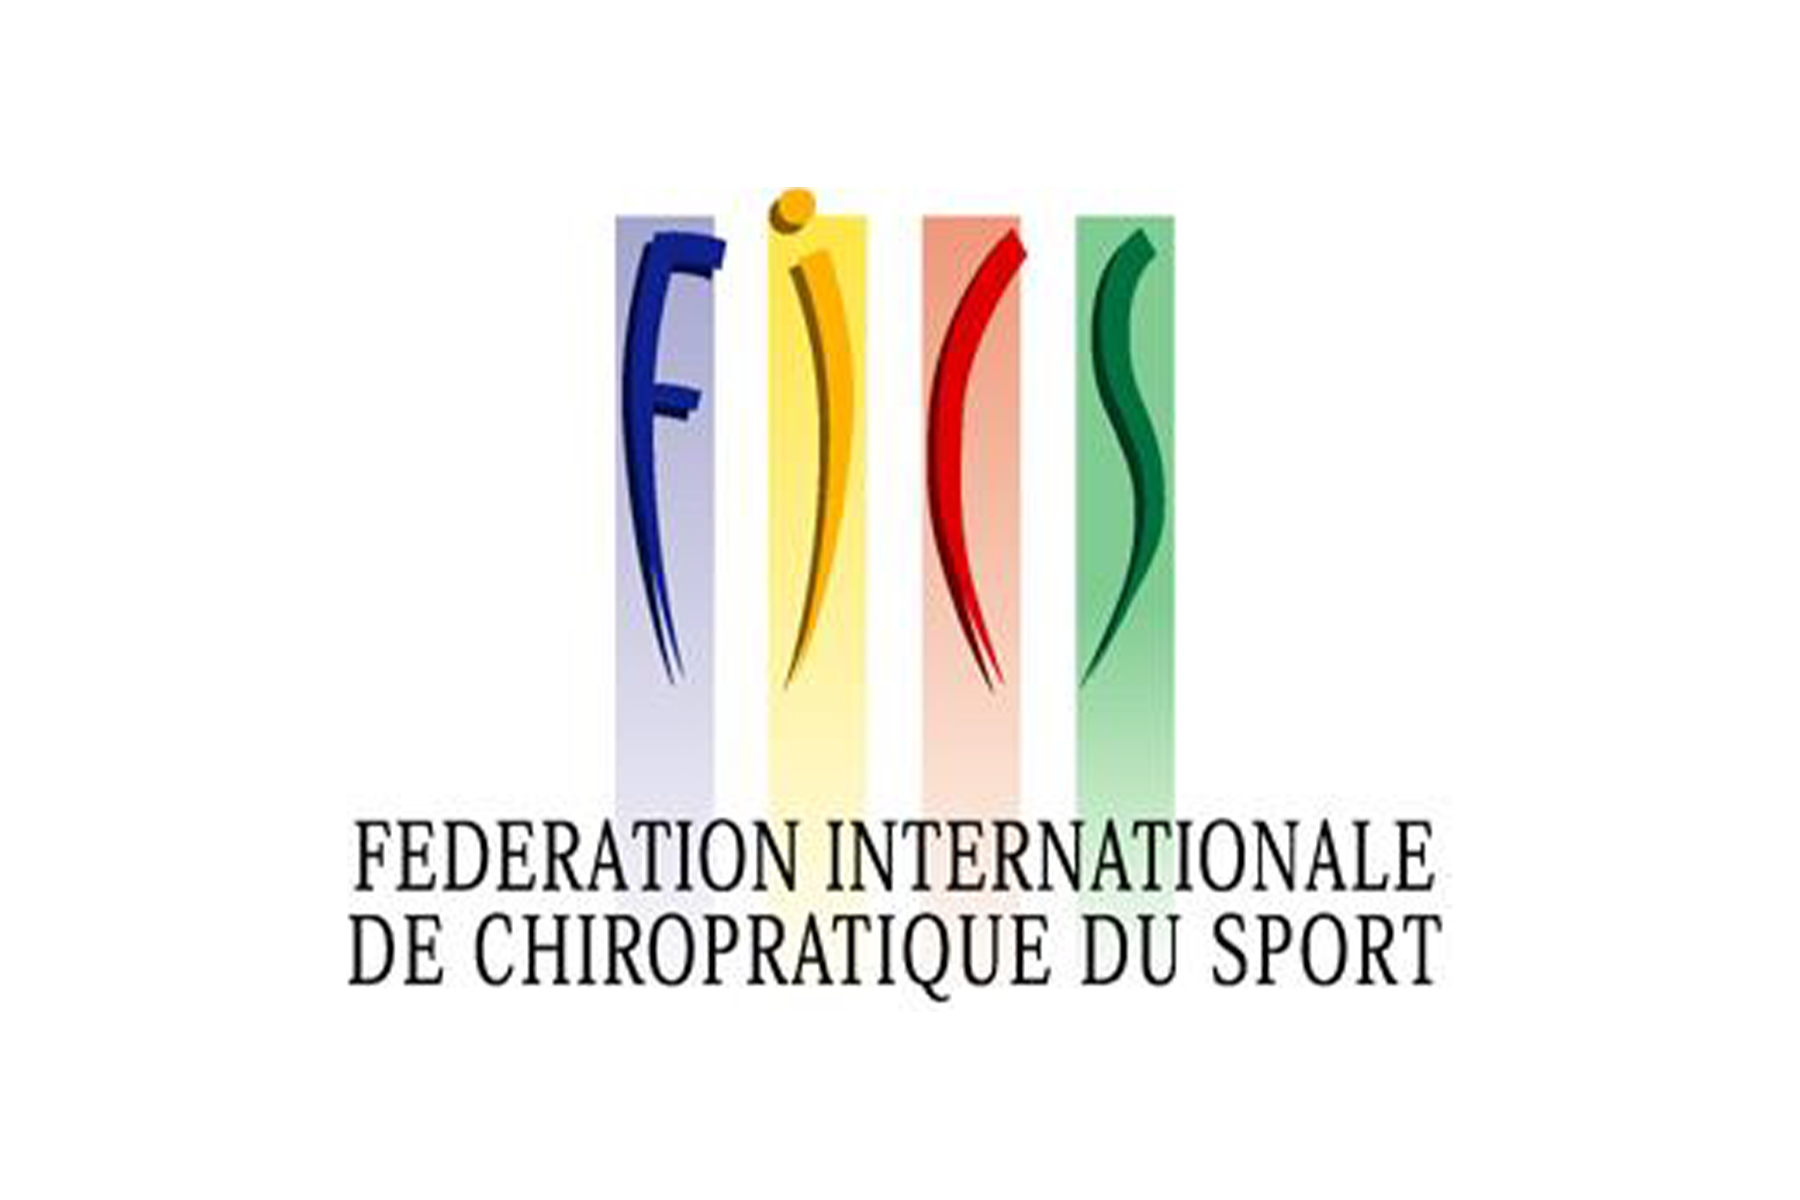 About FICS - FICS - International Federation of Sports Chiropractic